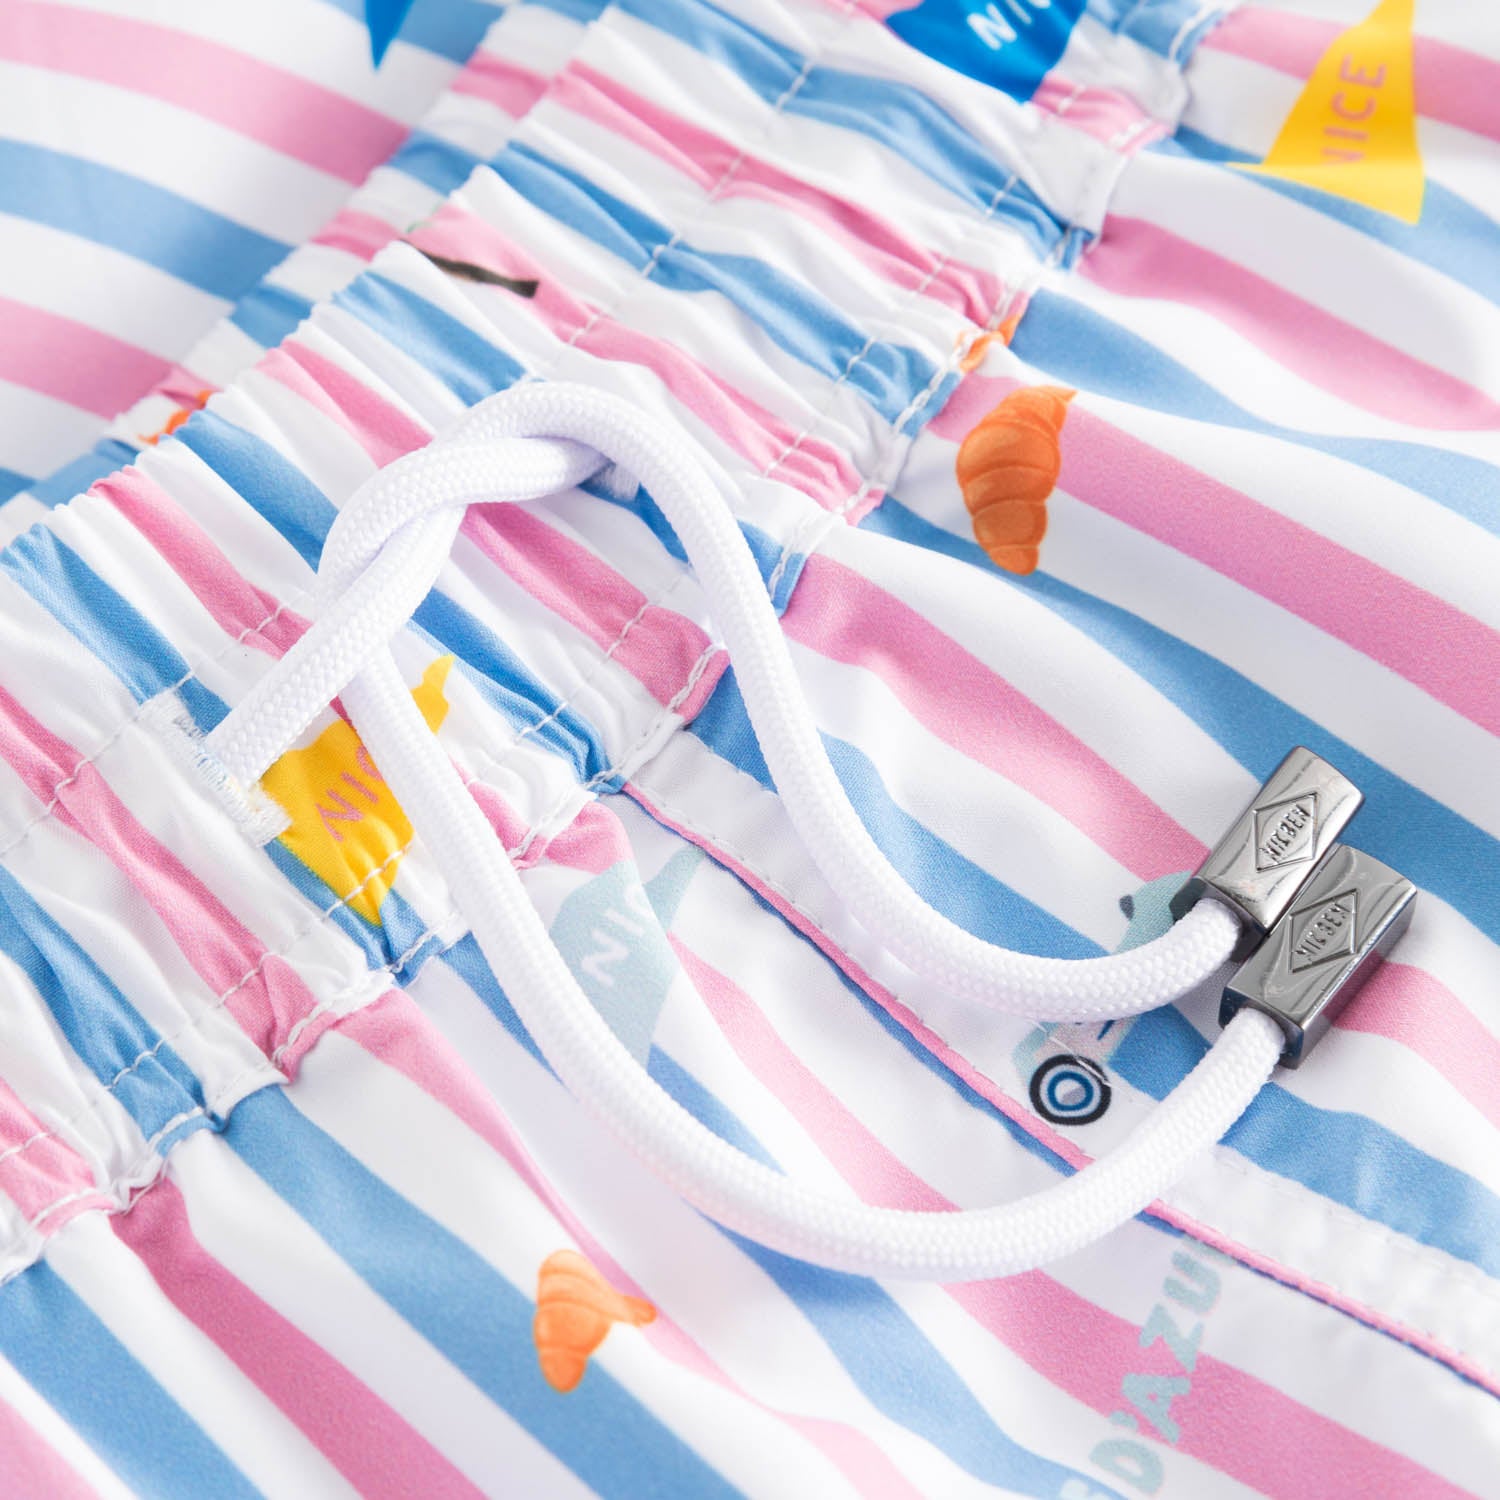 Drawstring on blue, pink and white striped swimtrunks